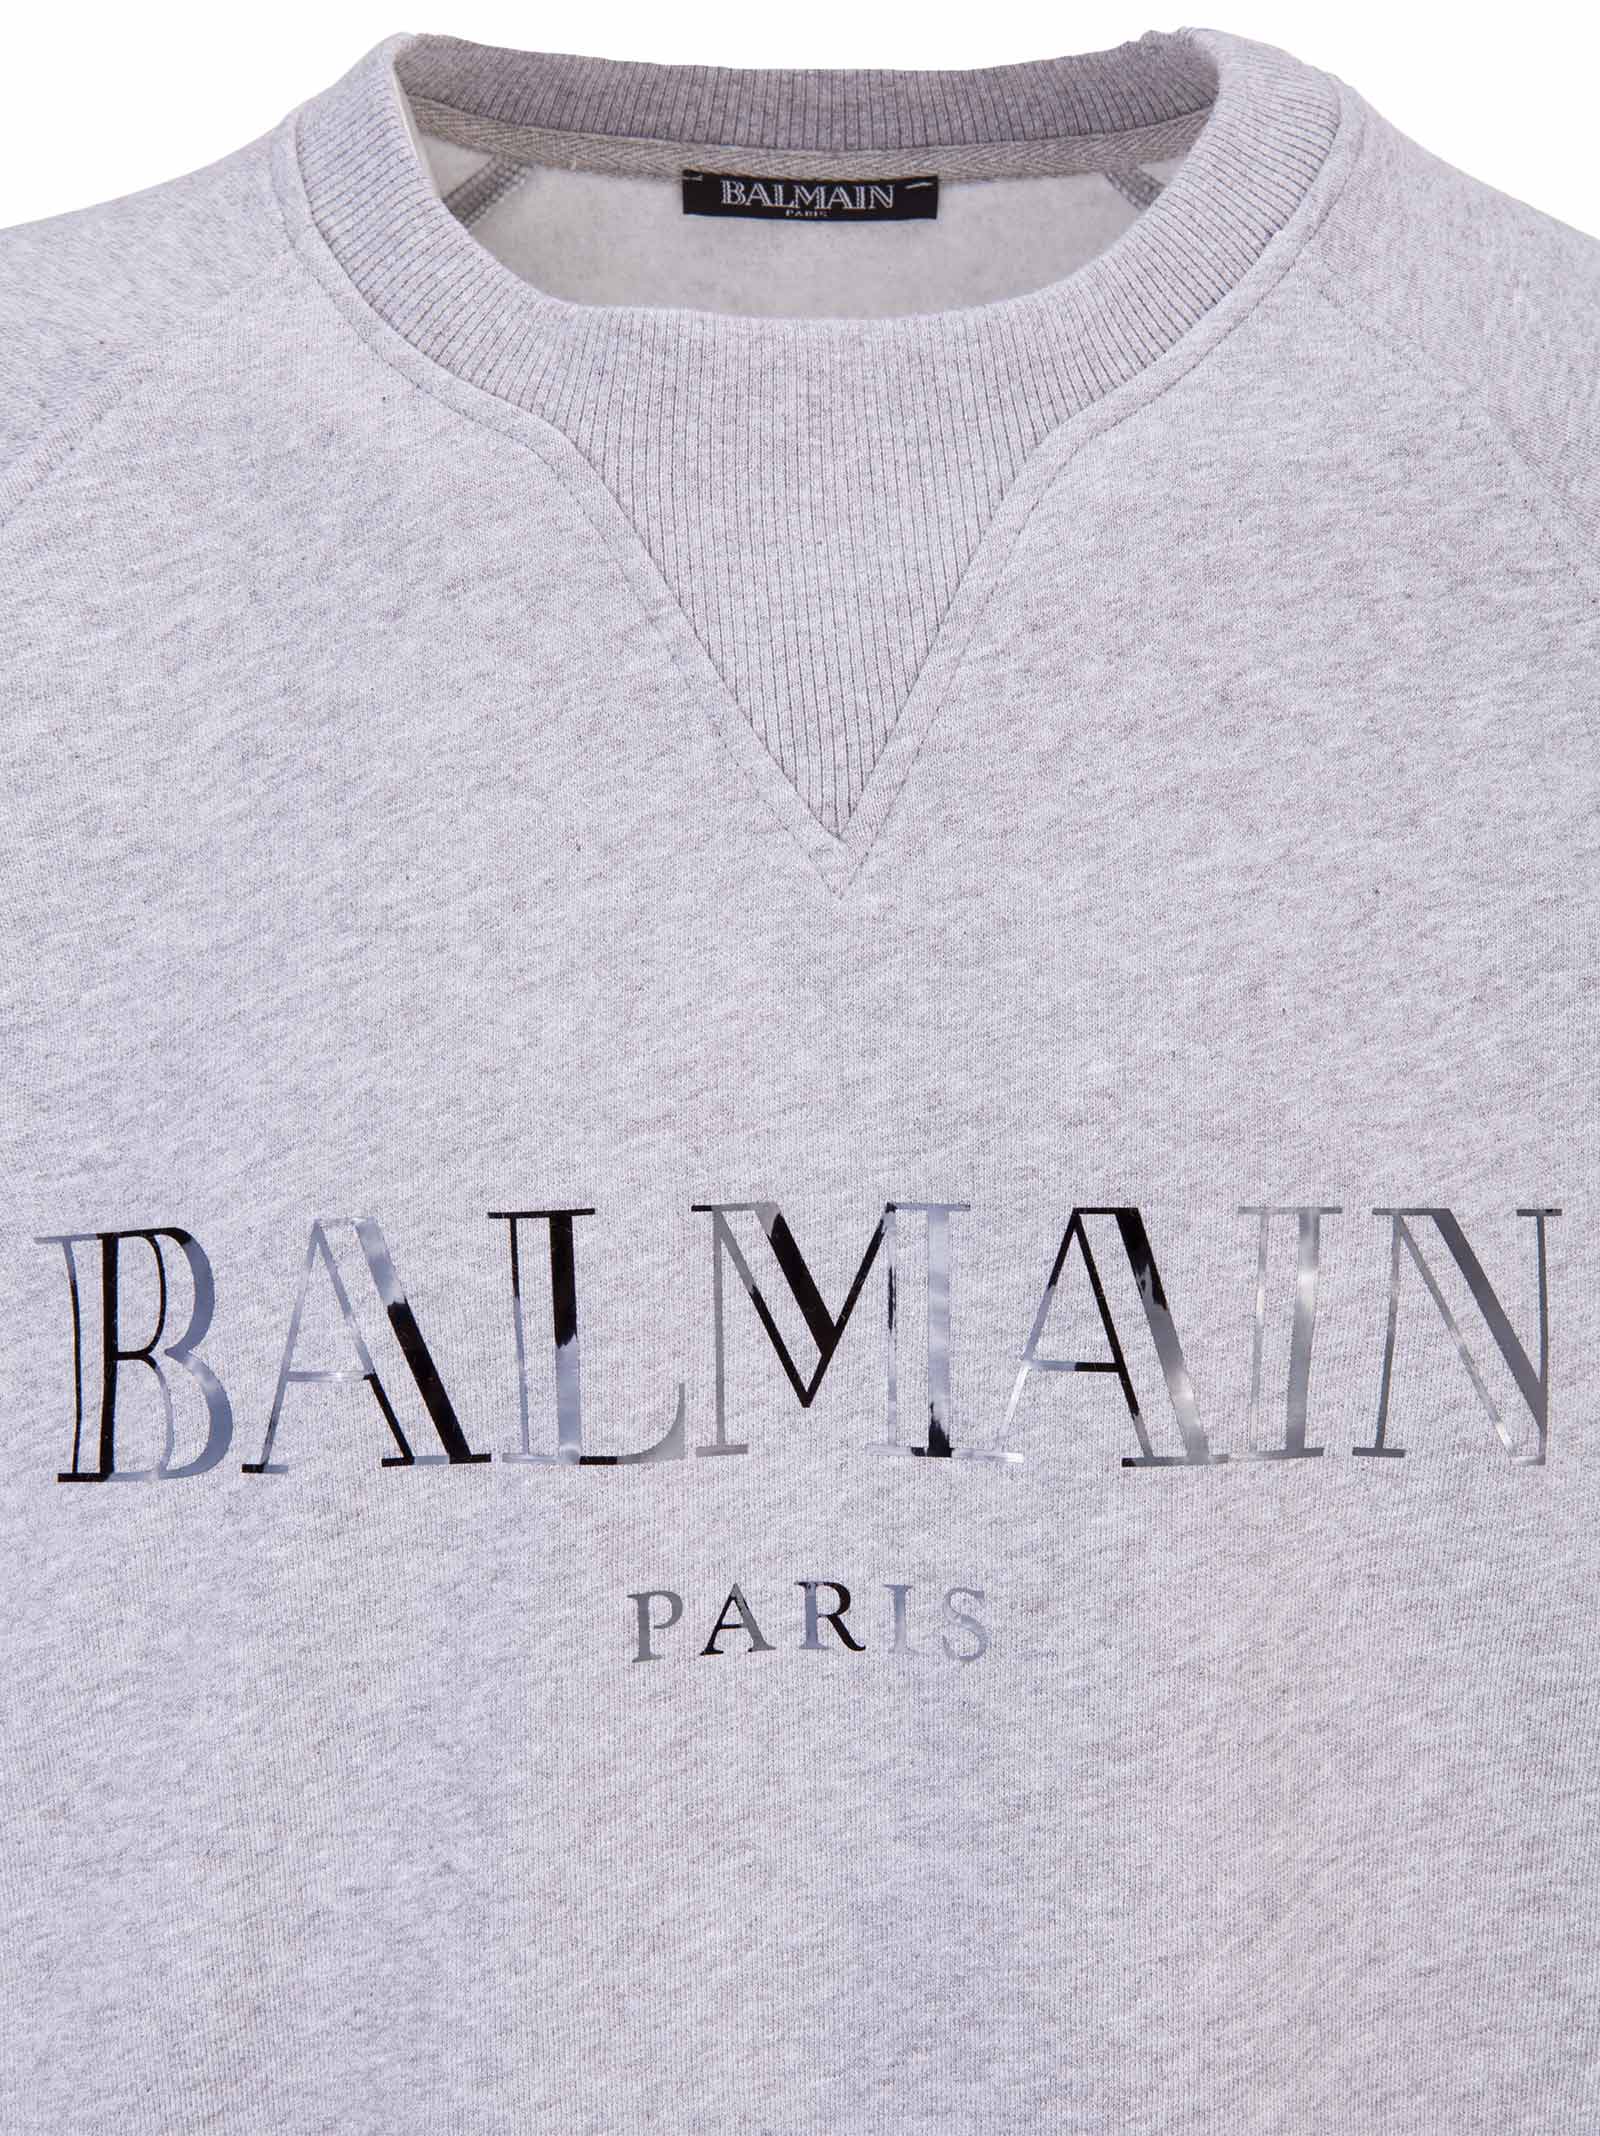 italist | Best price in the market for Balmain Balmain Paris Sweatshirt ...